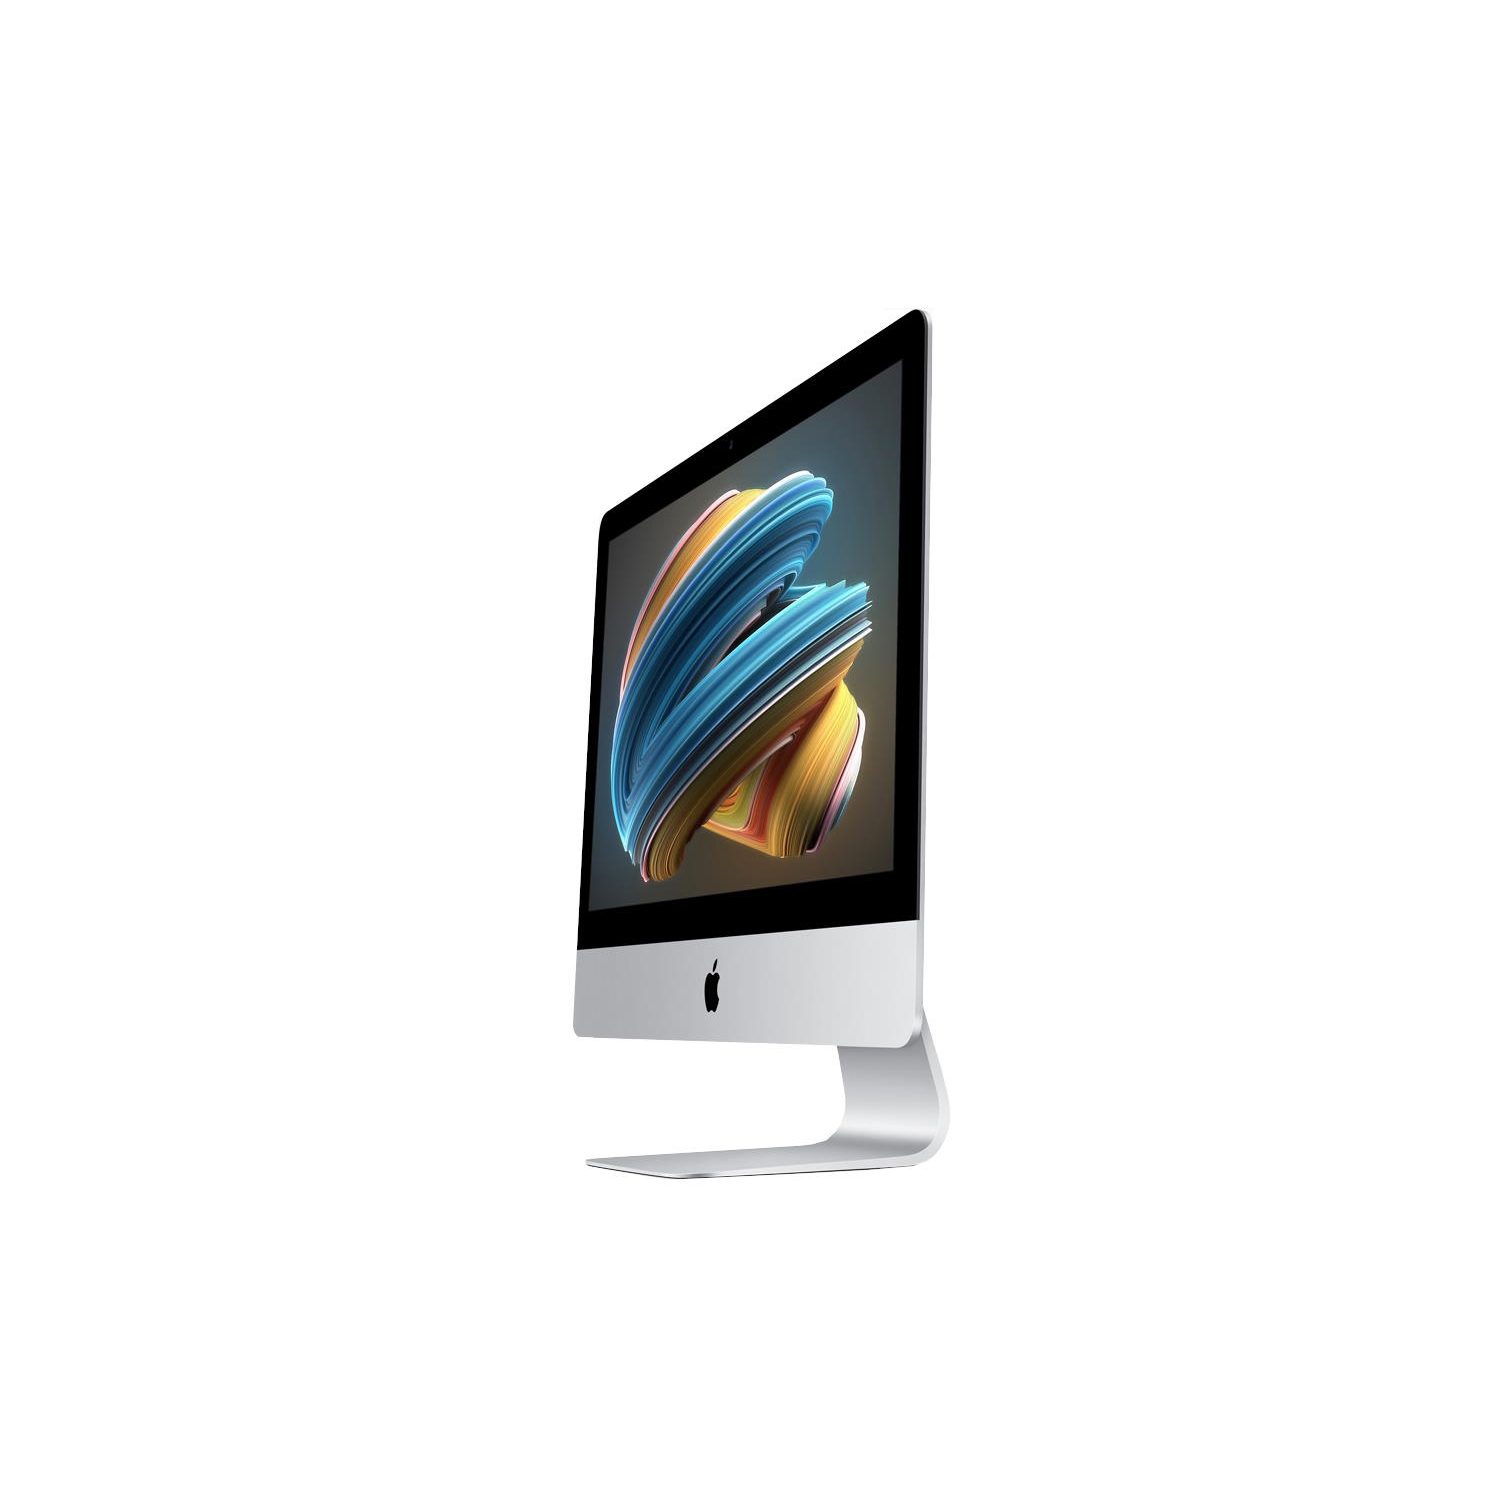 (Refurbished - Good) iMac 27-inch (Retina 5K) 3.4GHZ Quad-Core i5 (2017)  MNE92LL/A 8 GB RAM & 1 TB Fusion 5120 x 2880 Macally Wired Keyboard-Mouse  Mac 